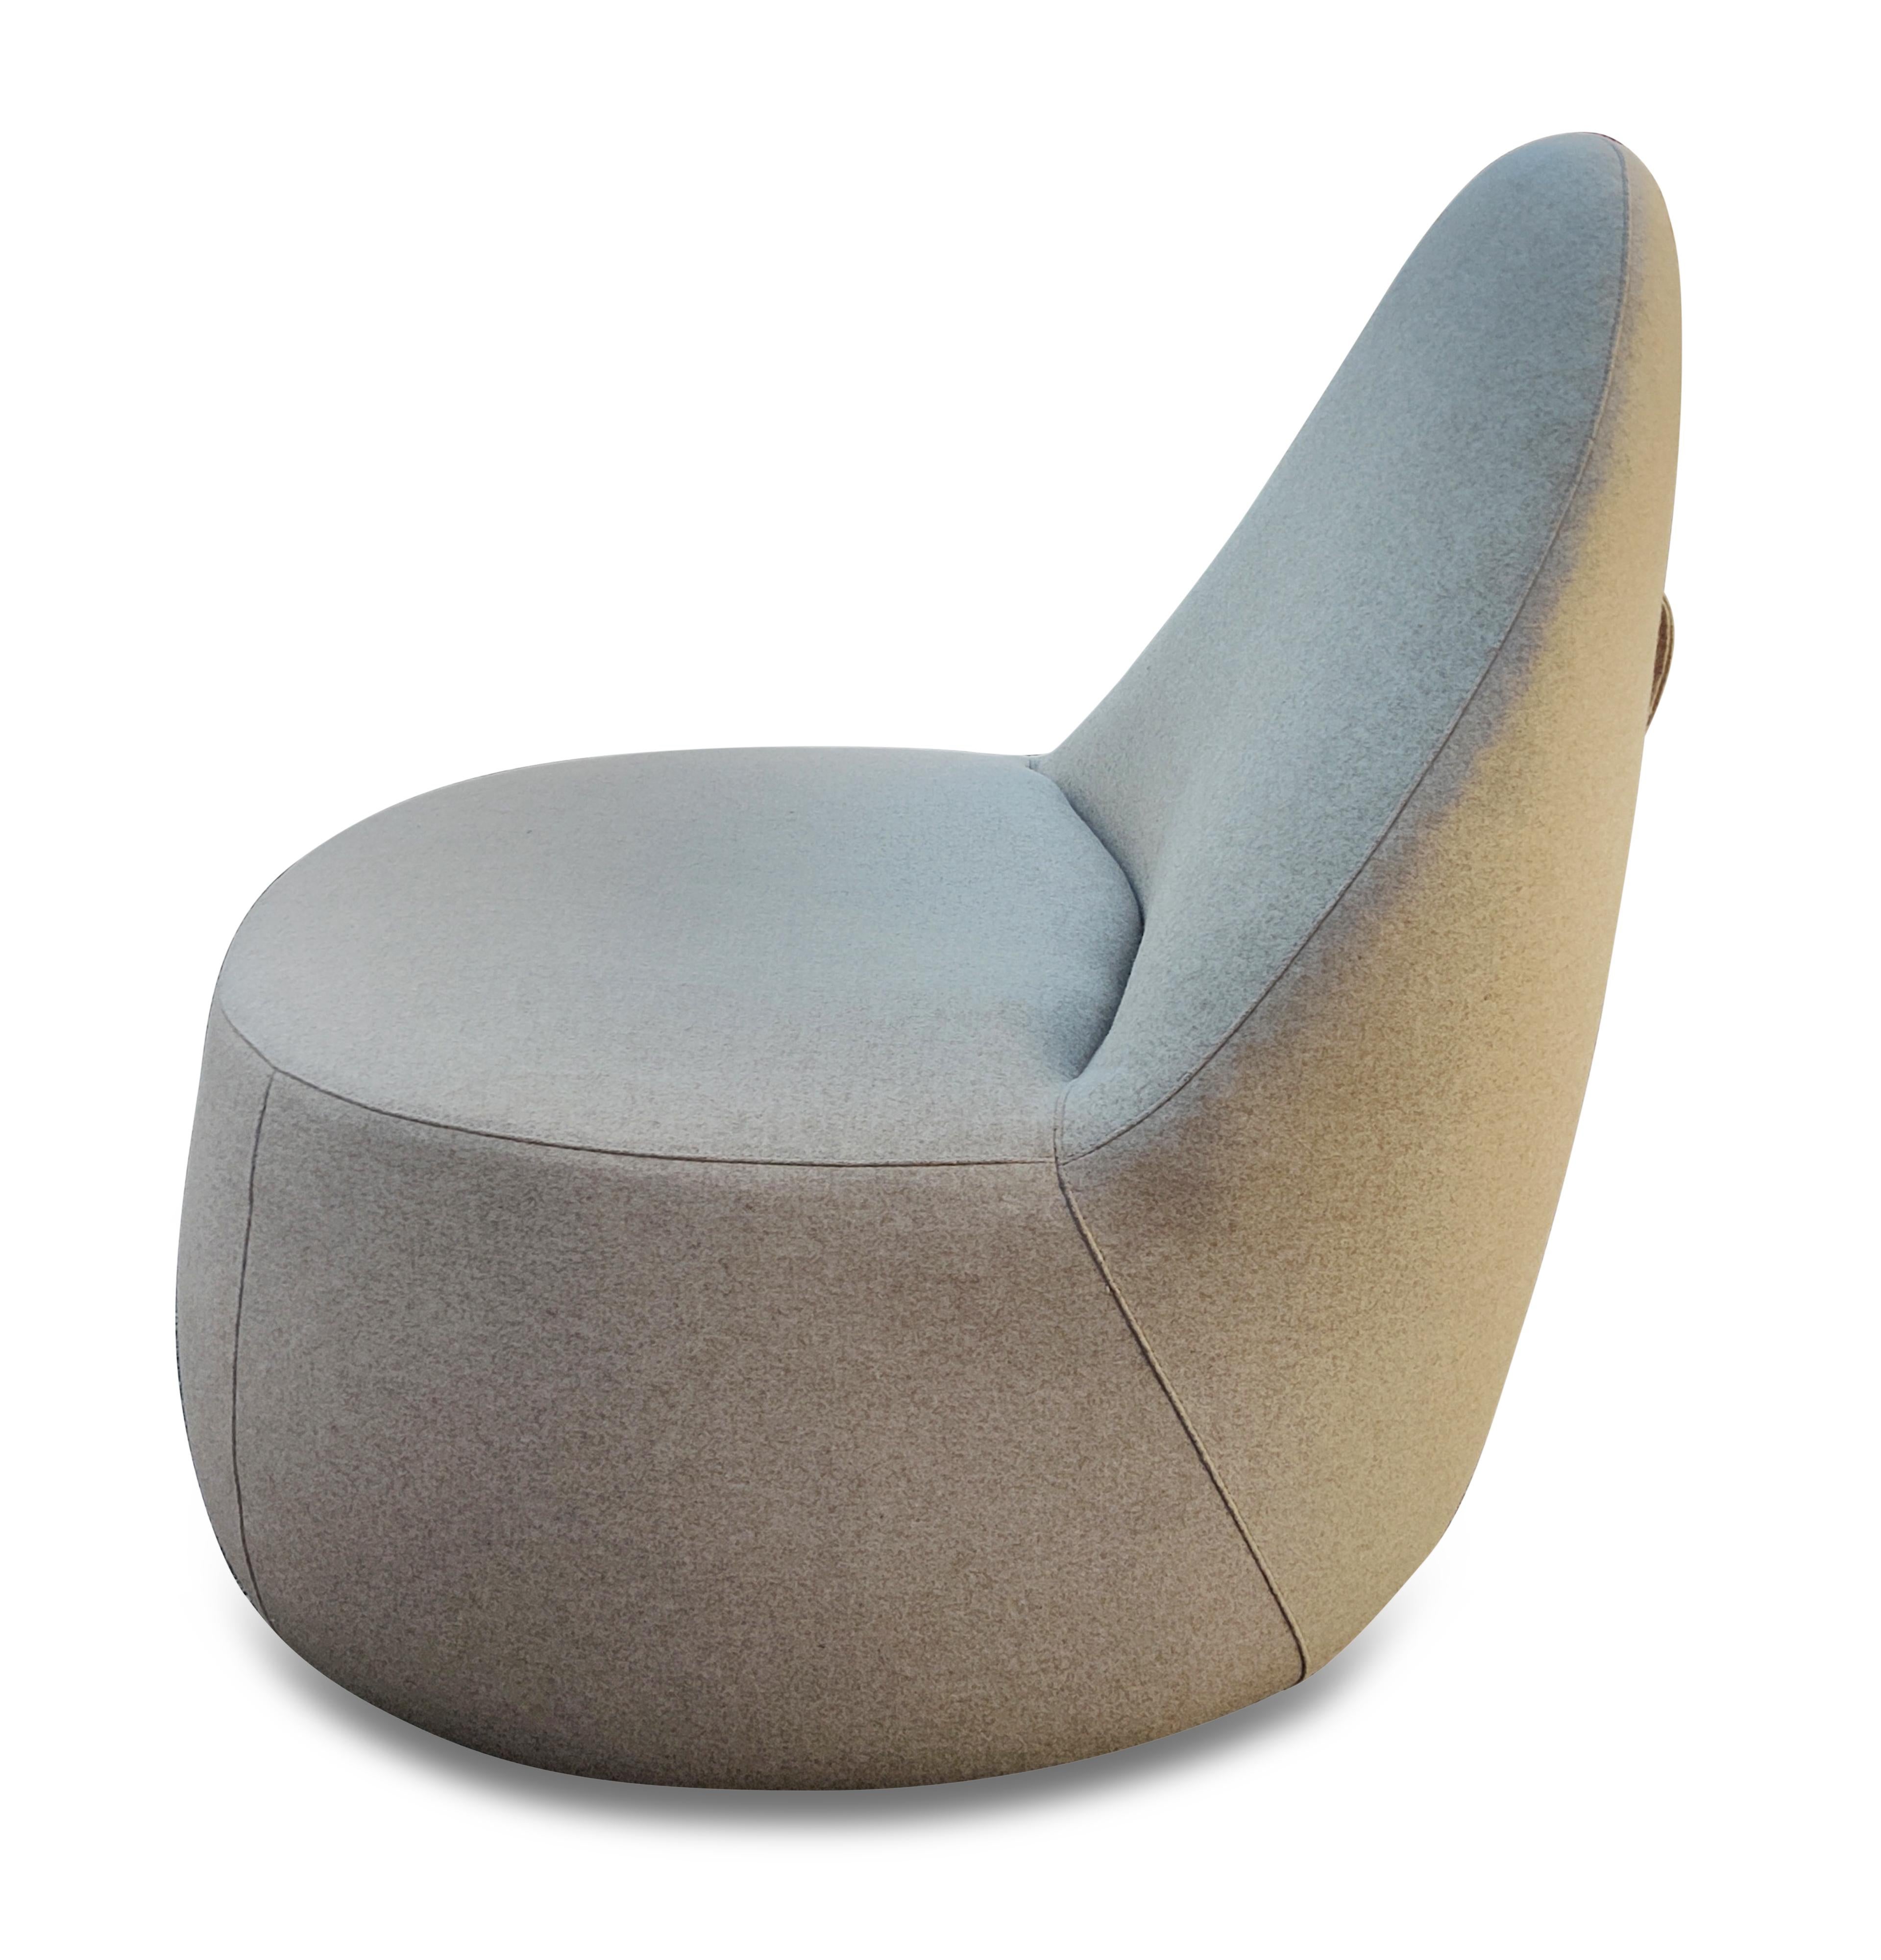 Metal Mitt Lounge Chairs Pair, Claudia + Harry Washington, Bernhardt Design Space-Age